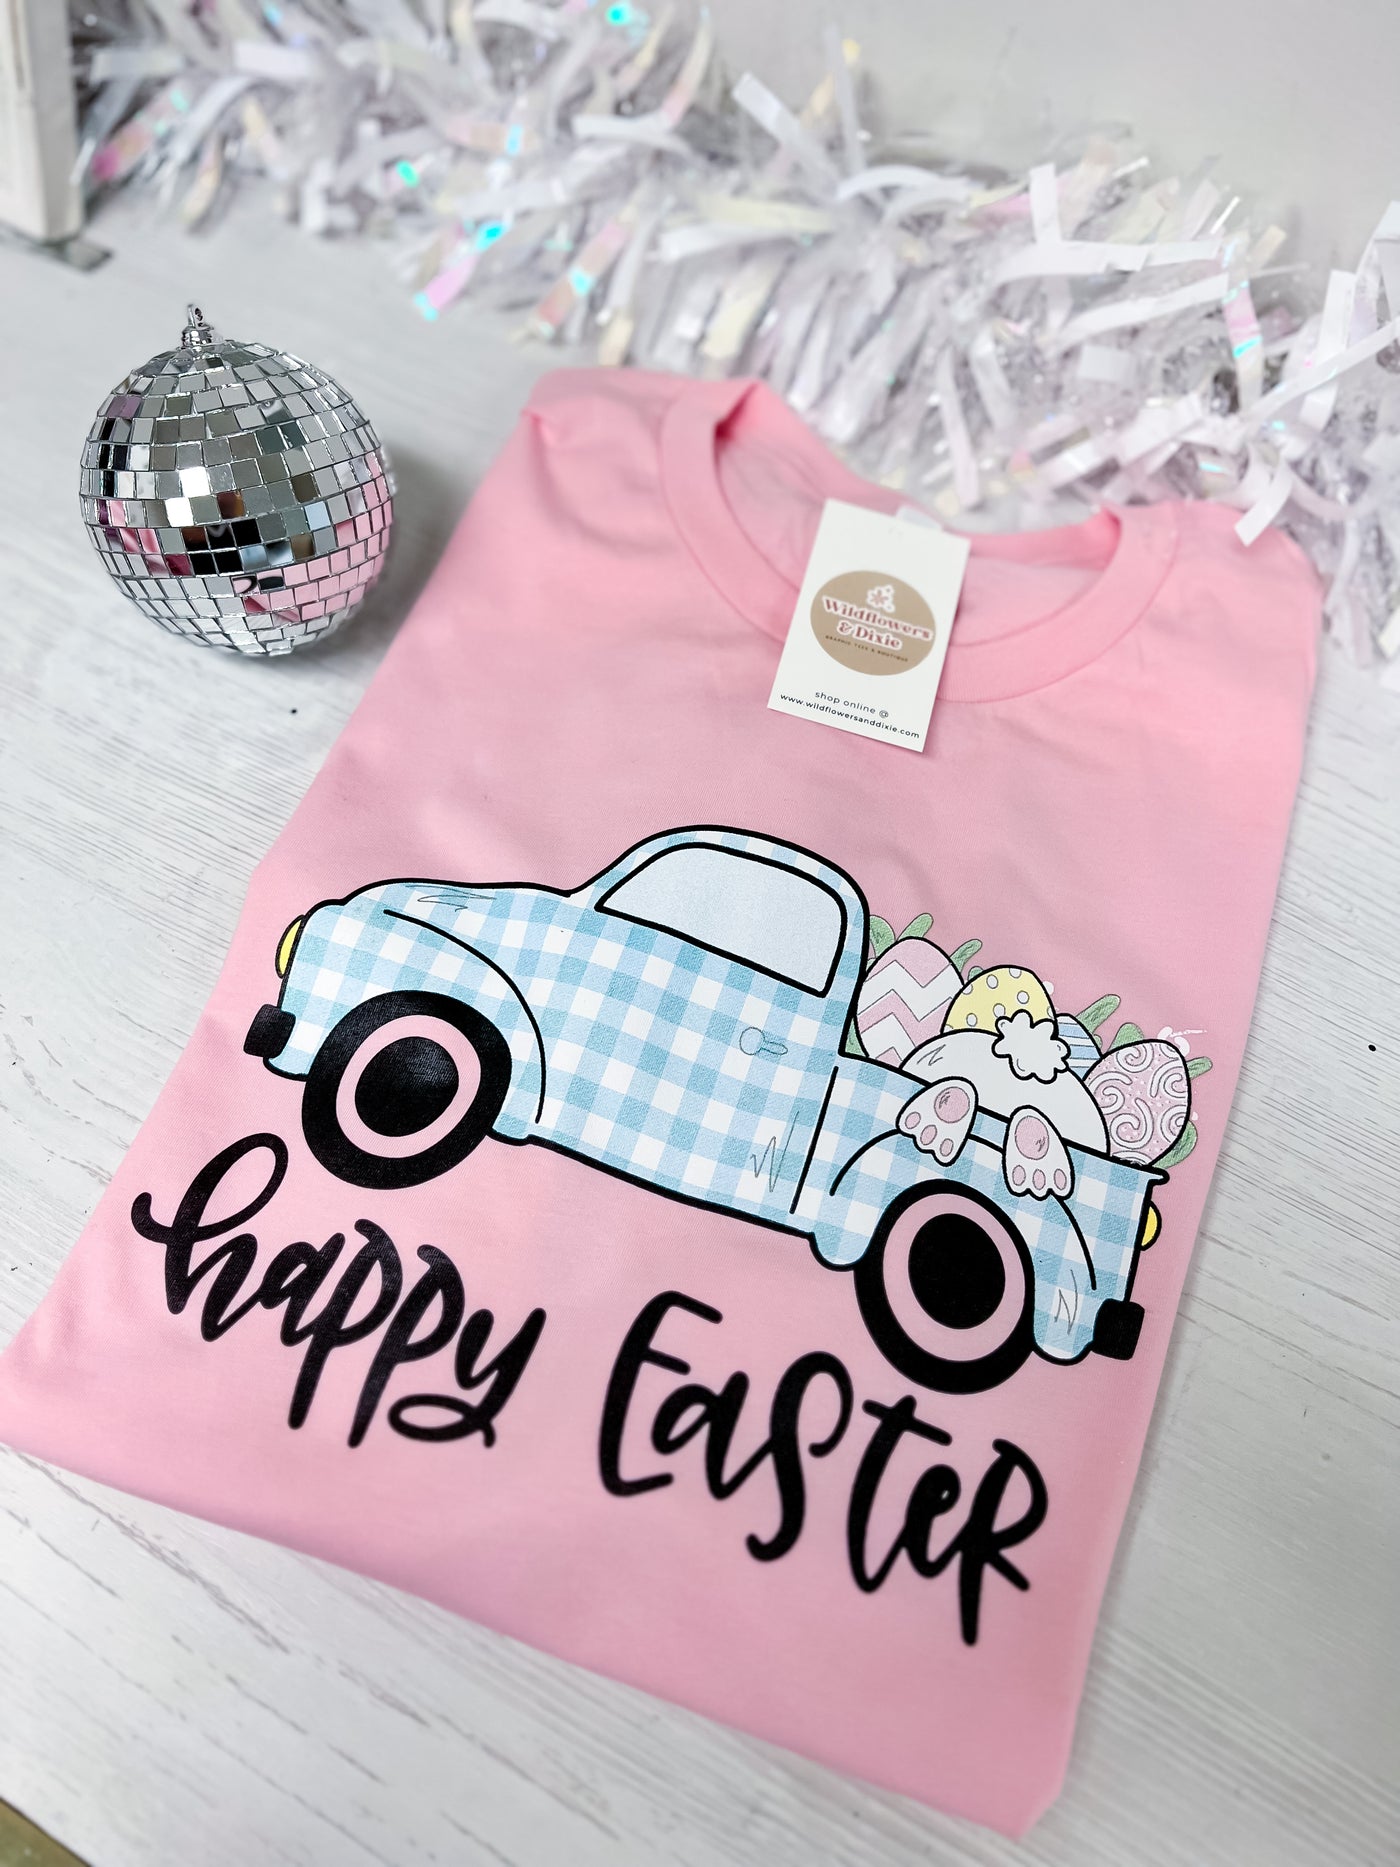 READY TO SHIP - "Happy Easter - Bunny Farm Truck" T-shirt